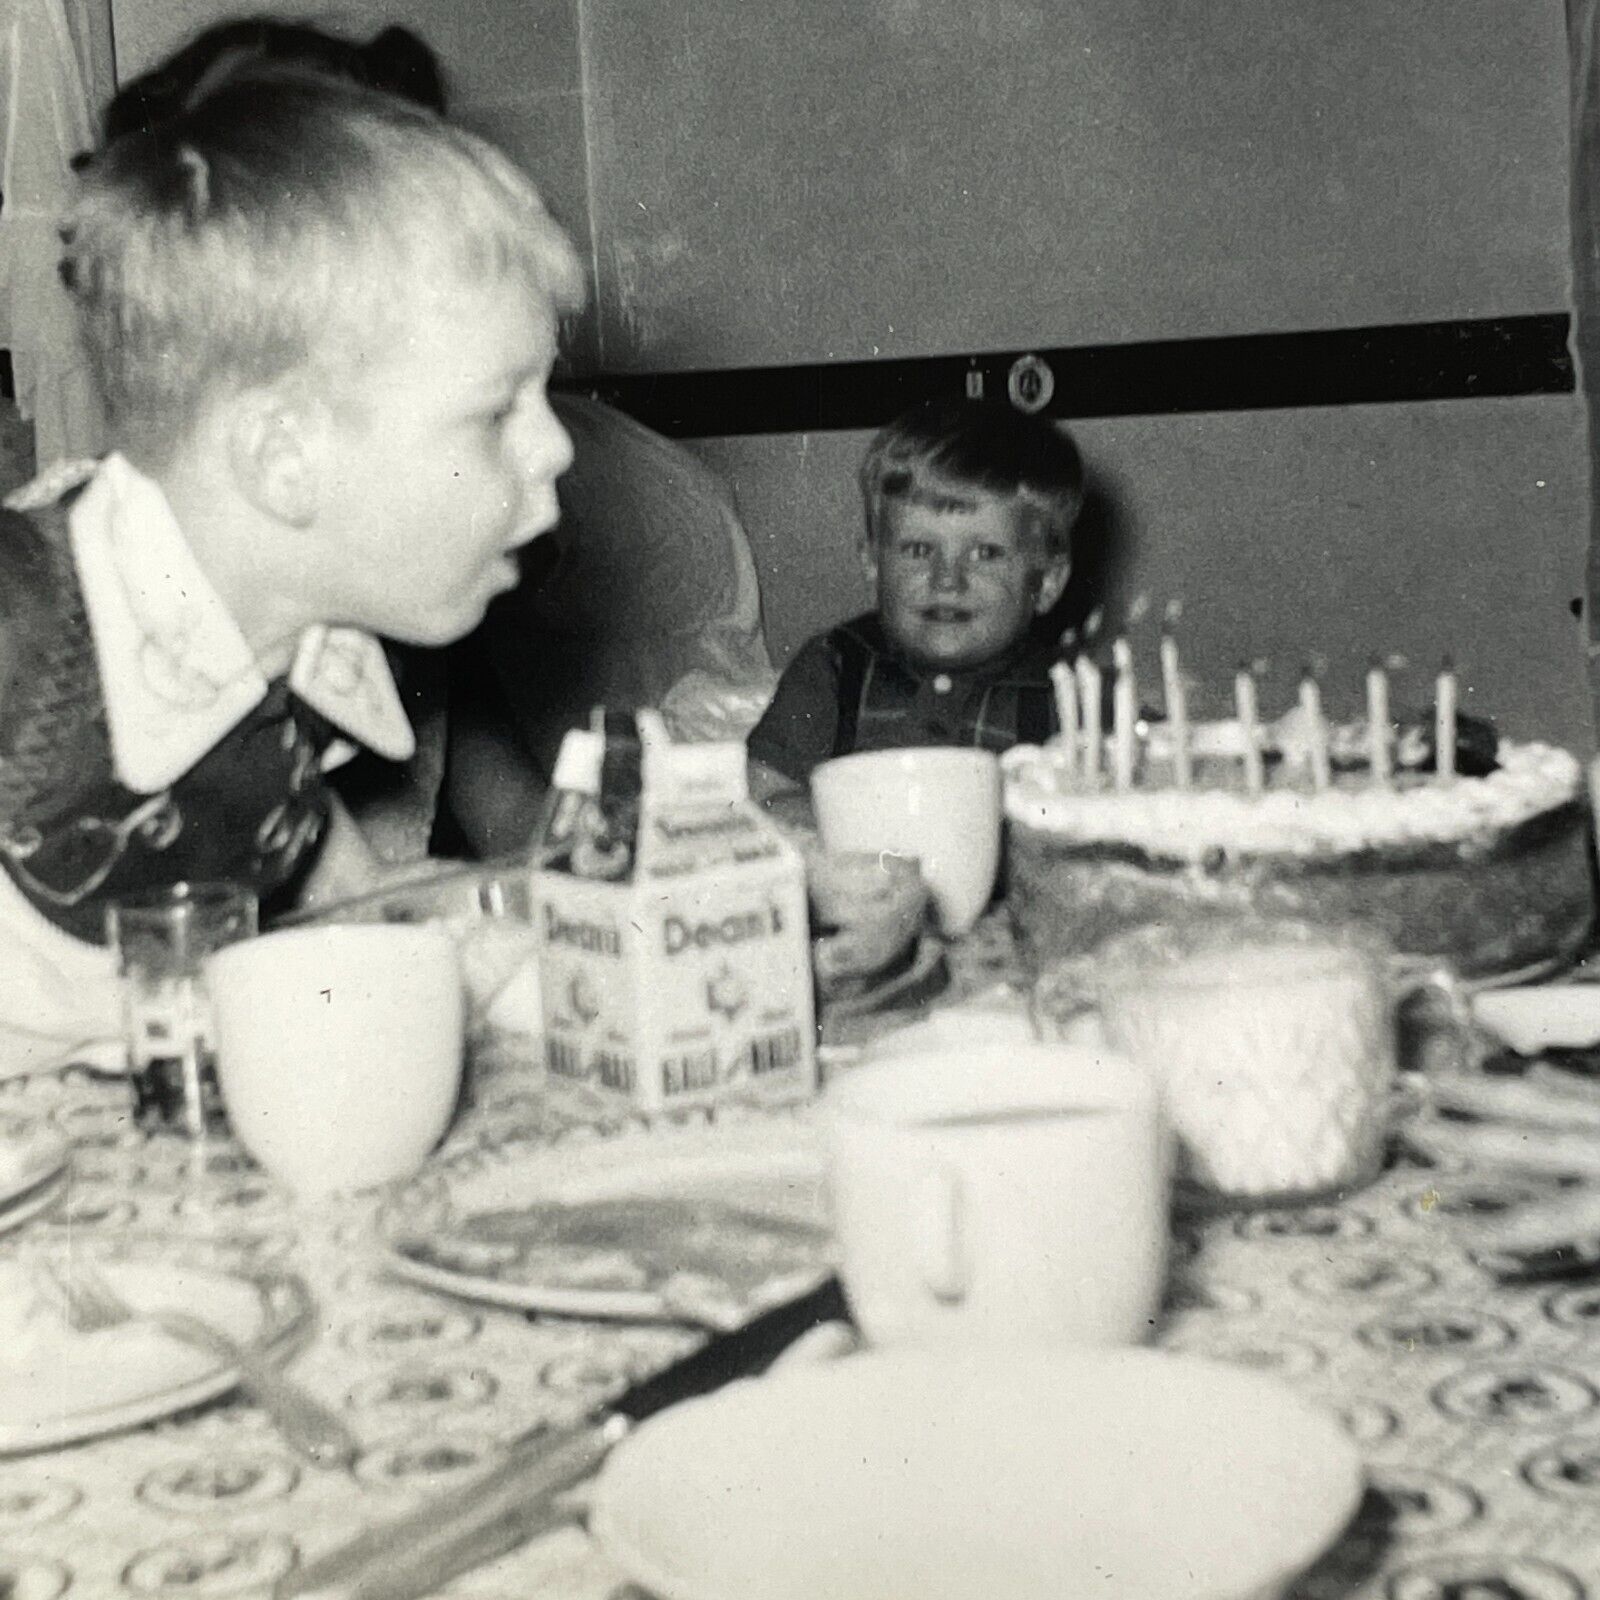 O3 Photograph Boy Candles Birthday Cake 1950s Action